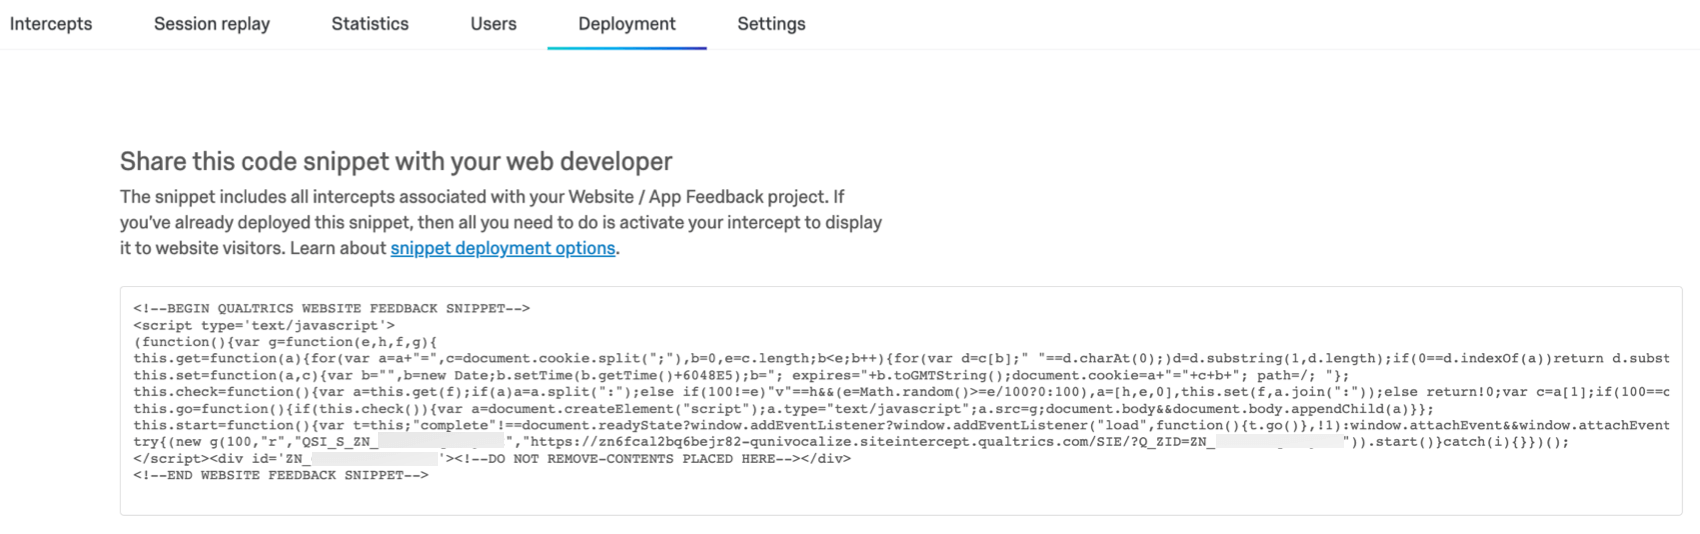 Help With Coding This Get To Stage To Unlock Door Script - Scripting  Support - Developer Forum